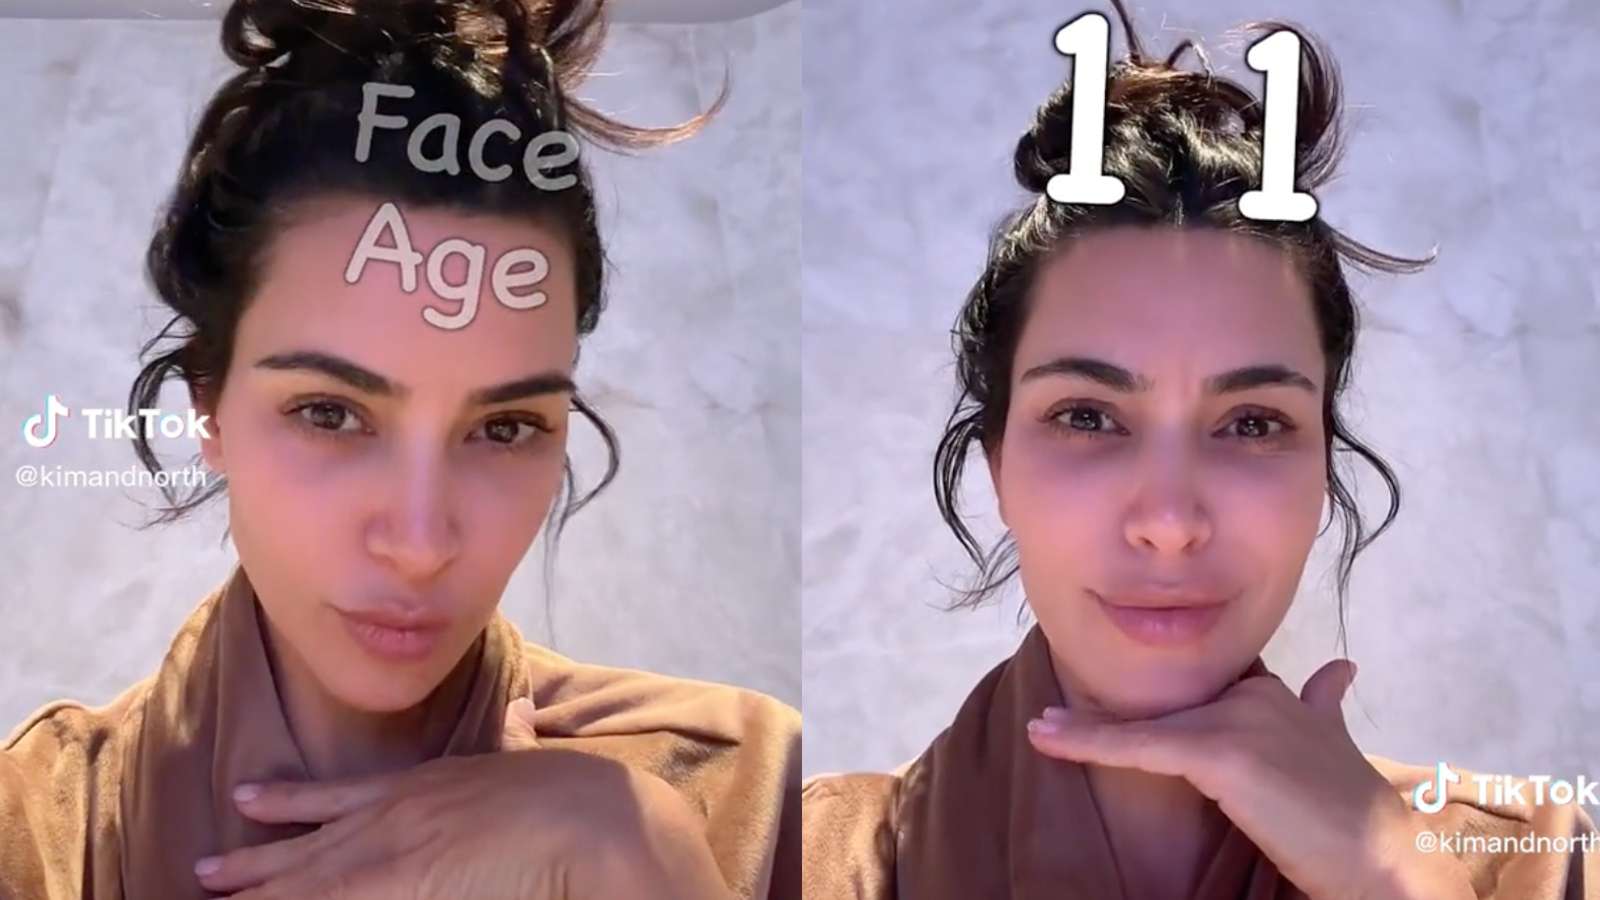 Kim Kardashian using TikTok face age filter